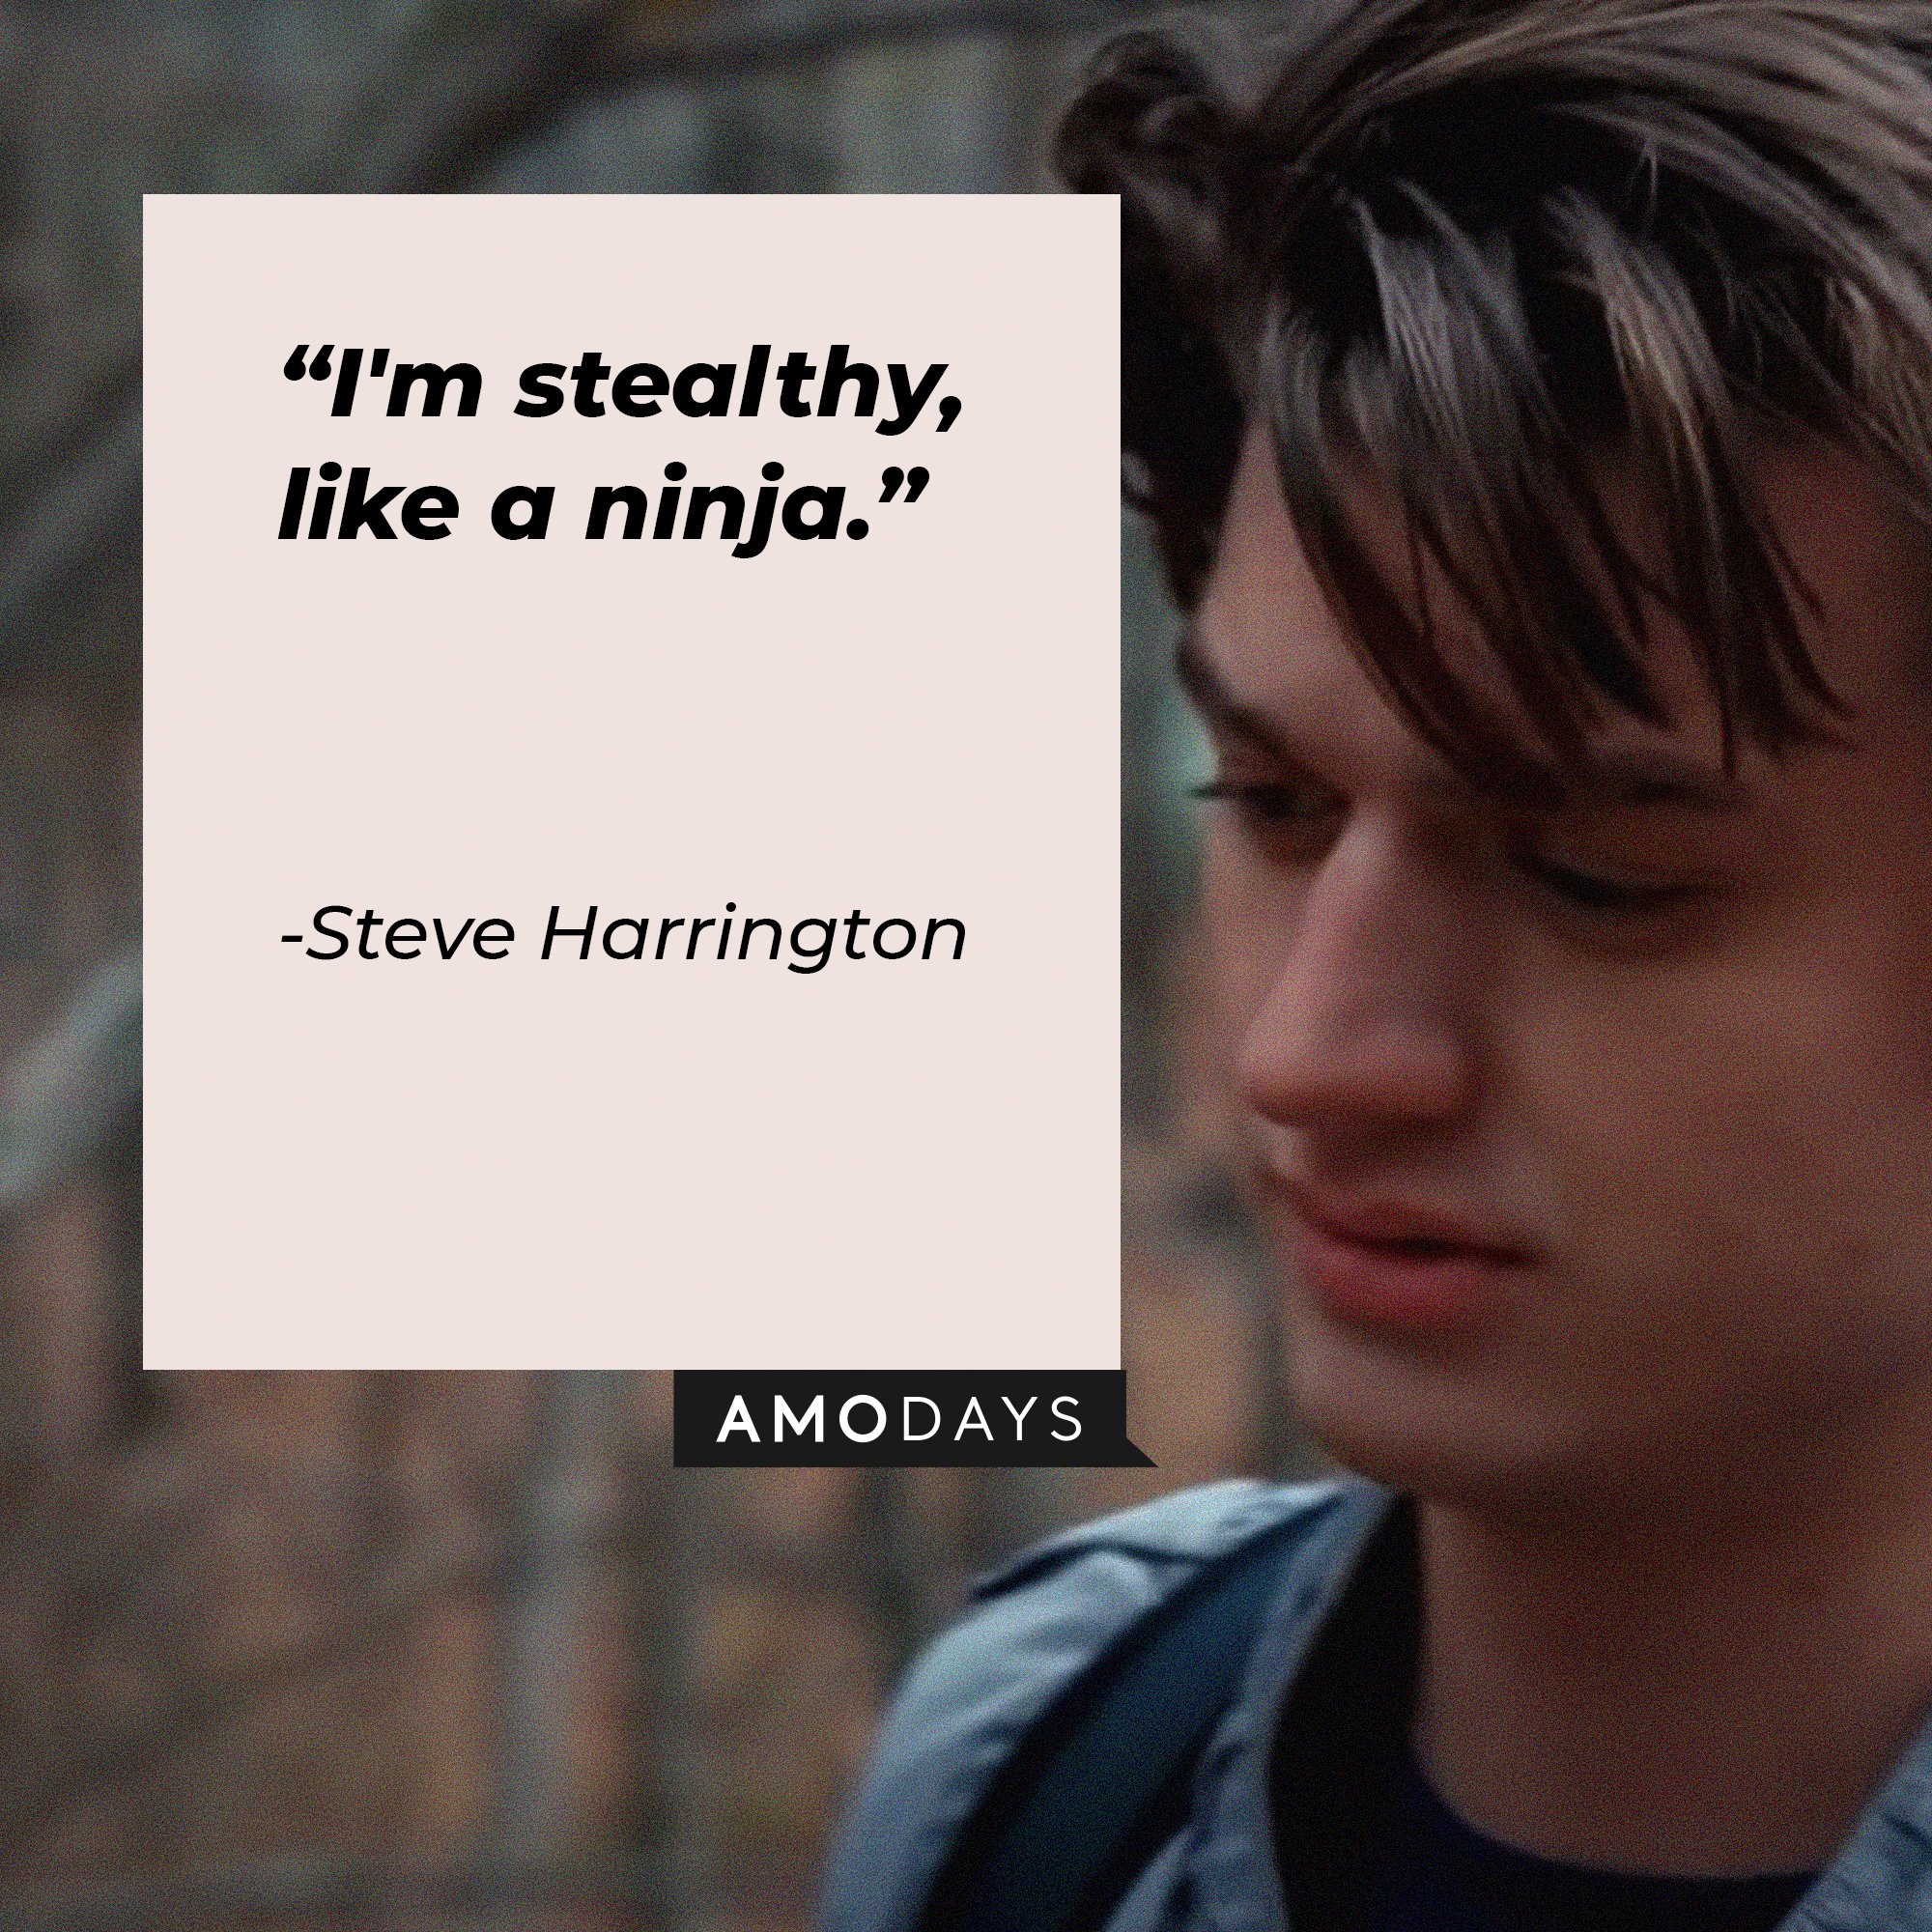  Steve Harrington's quote: "I'm stealthy, like a ninja." | Image: AmoDays  